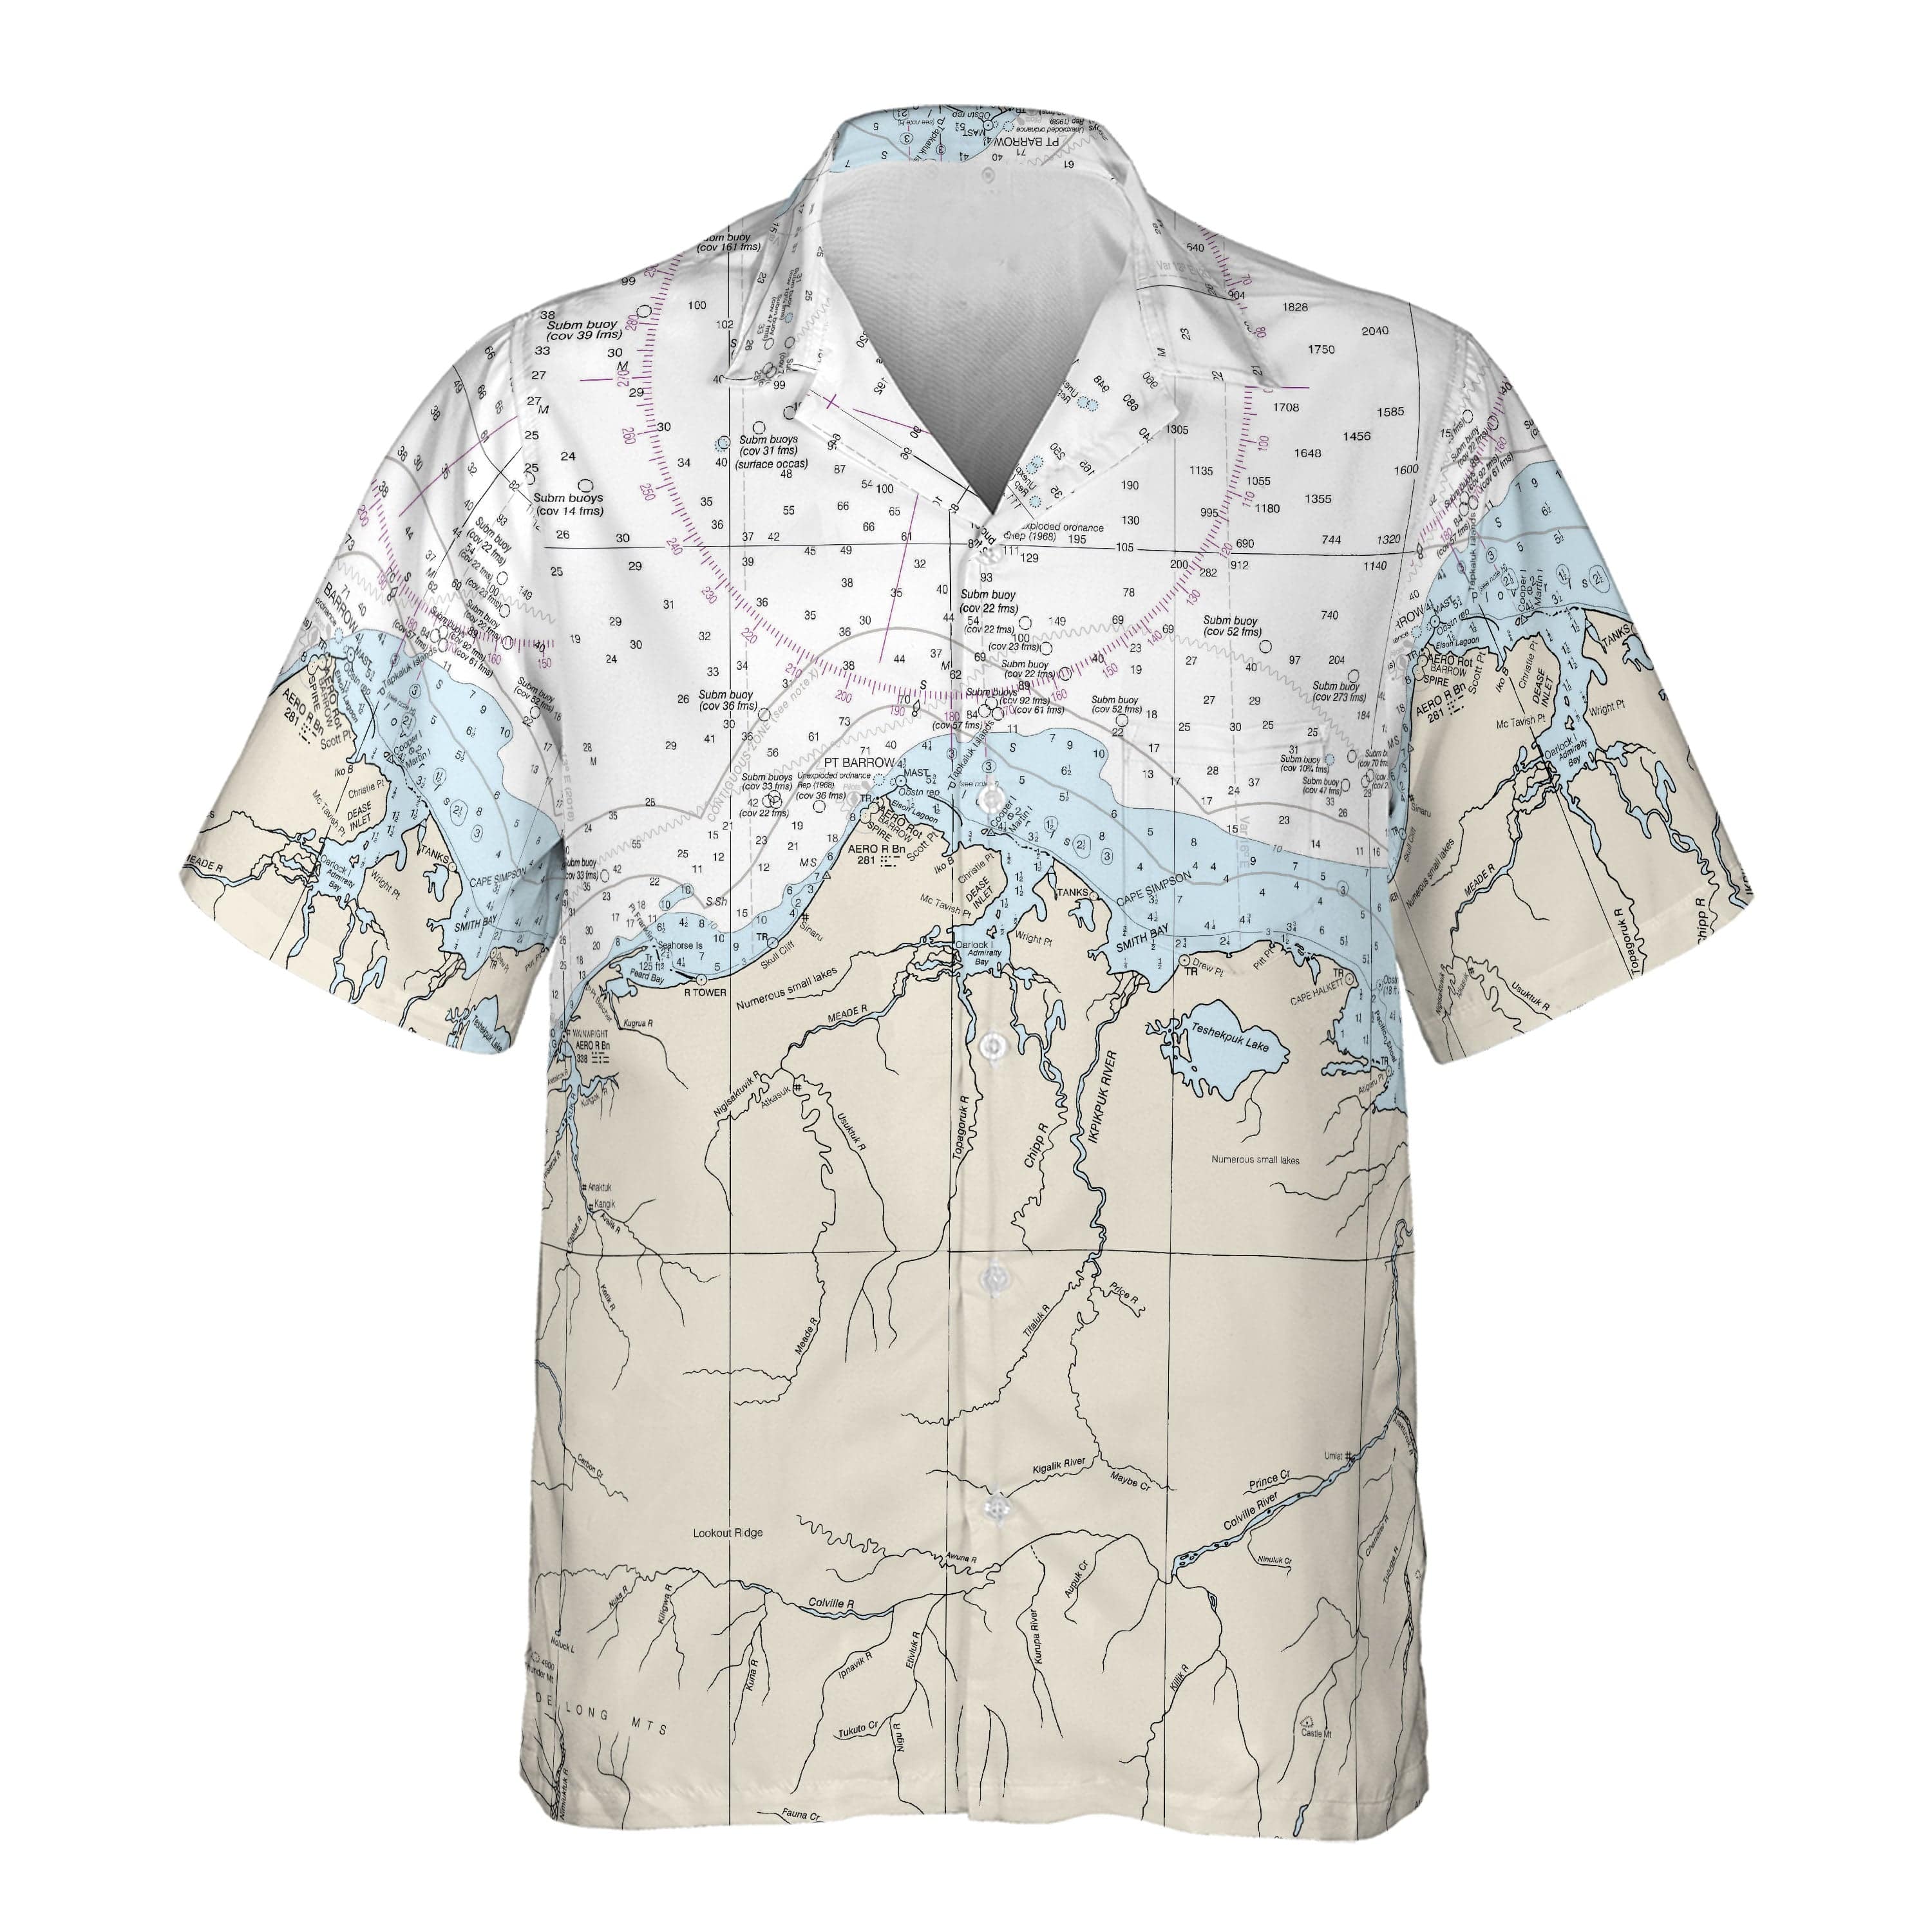 The Point Barrow Pocket Shirt